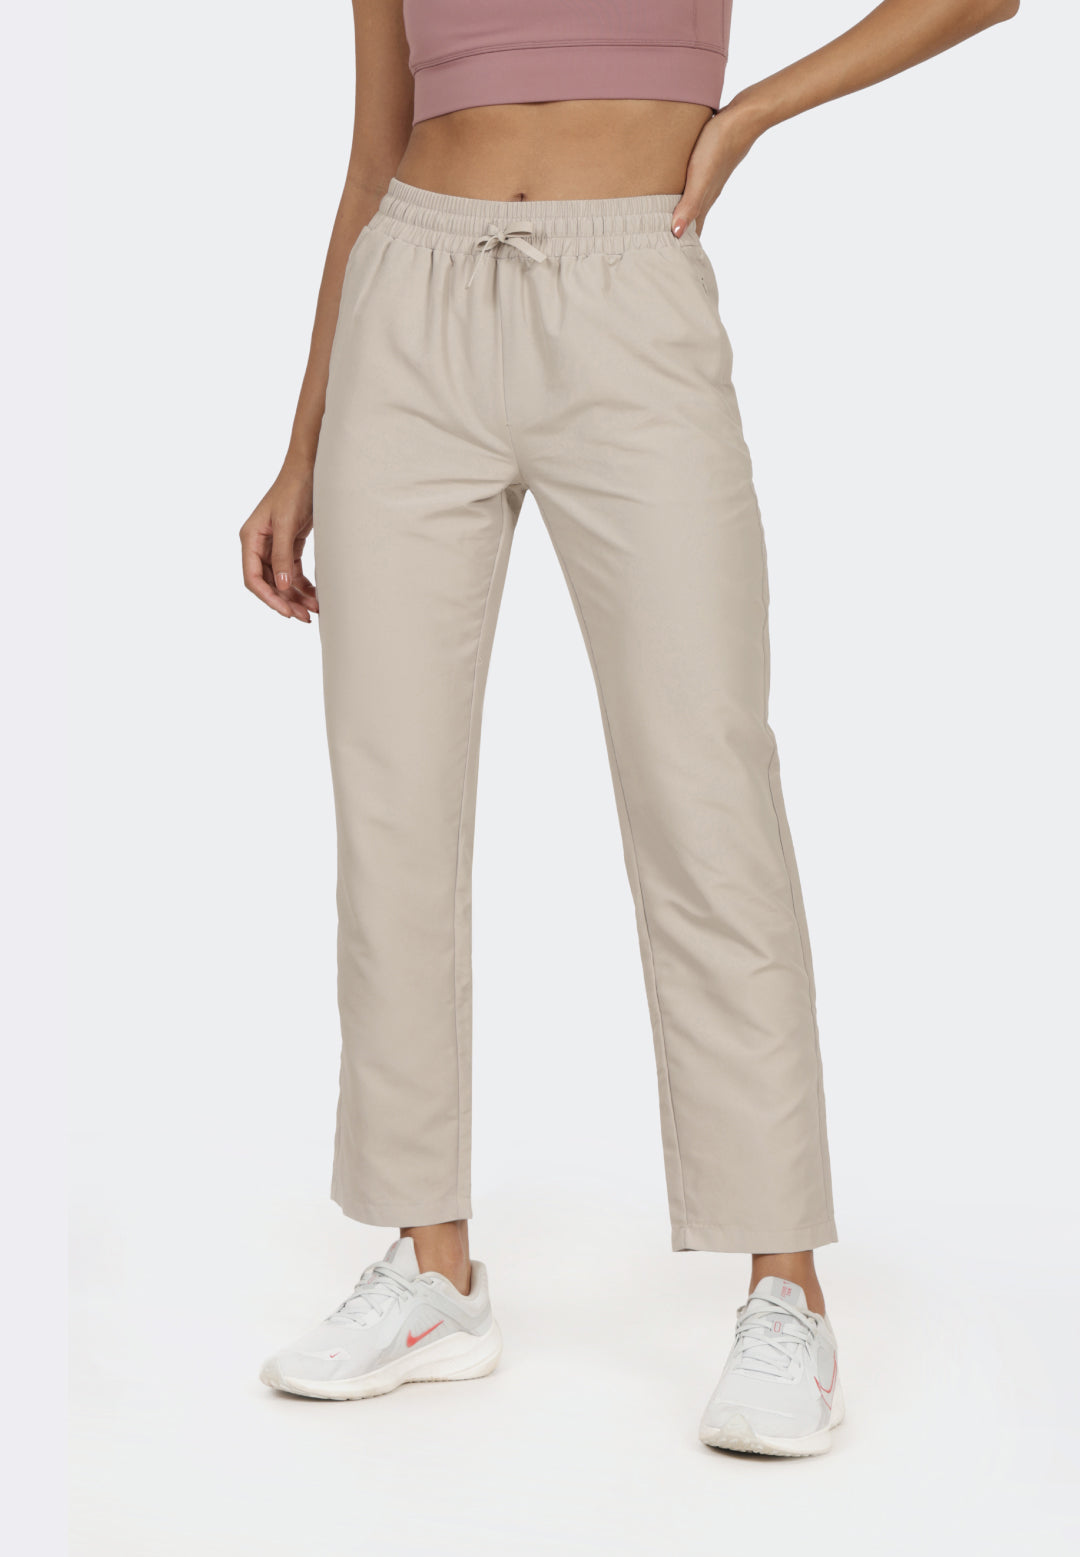 Buy Grey Track Pants for Women by BLISSCLUB Online